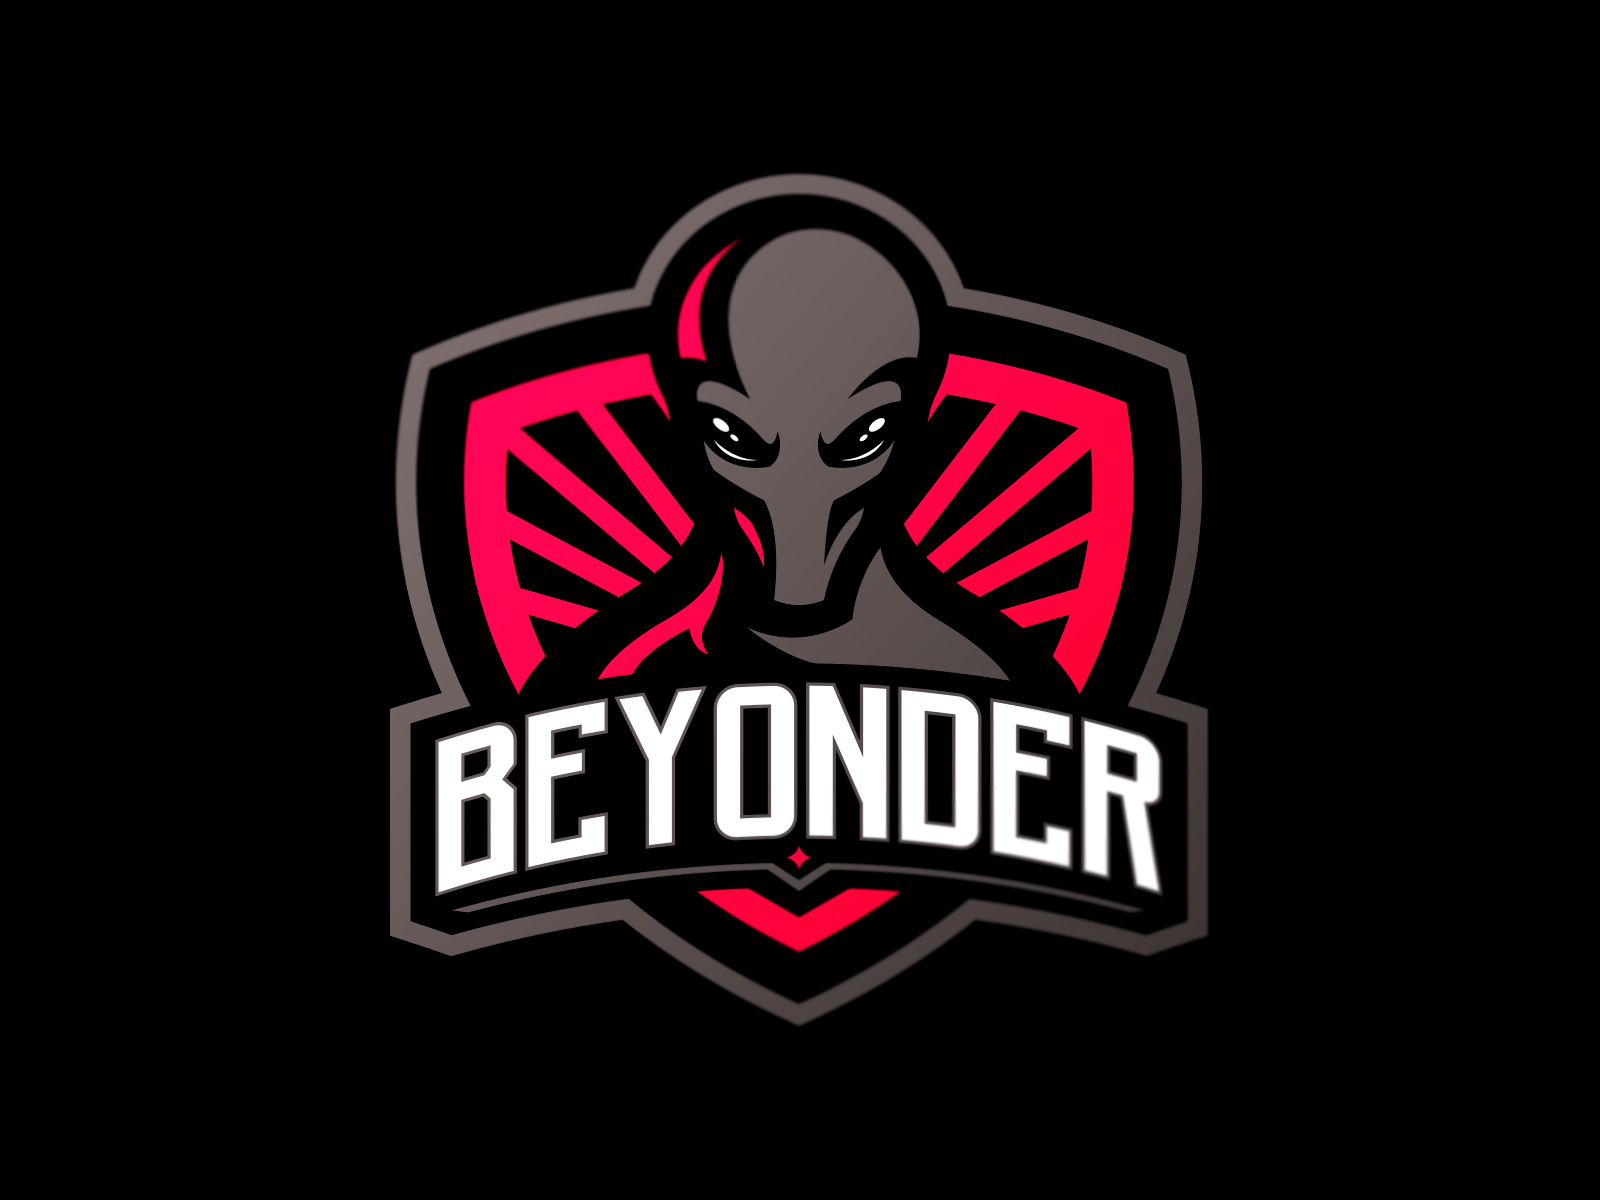 Beyonder